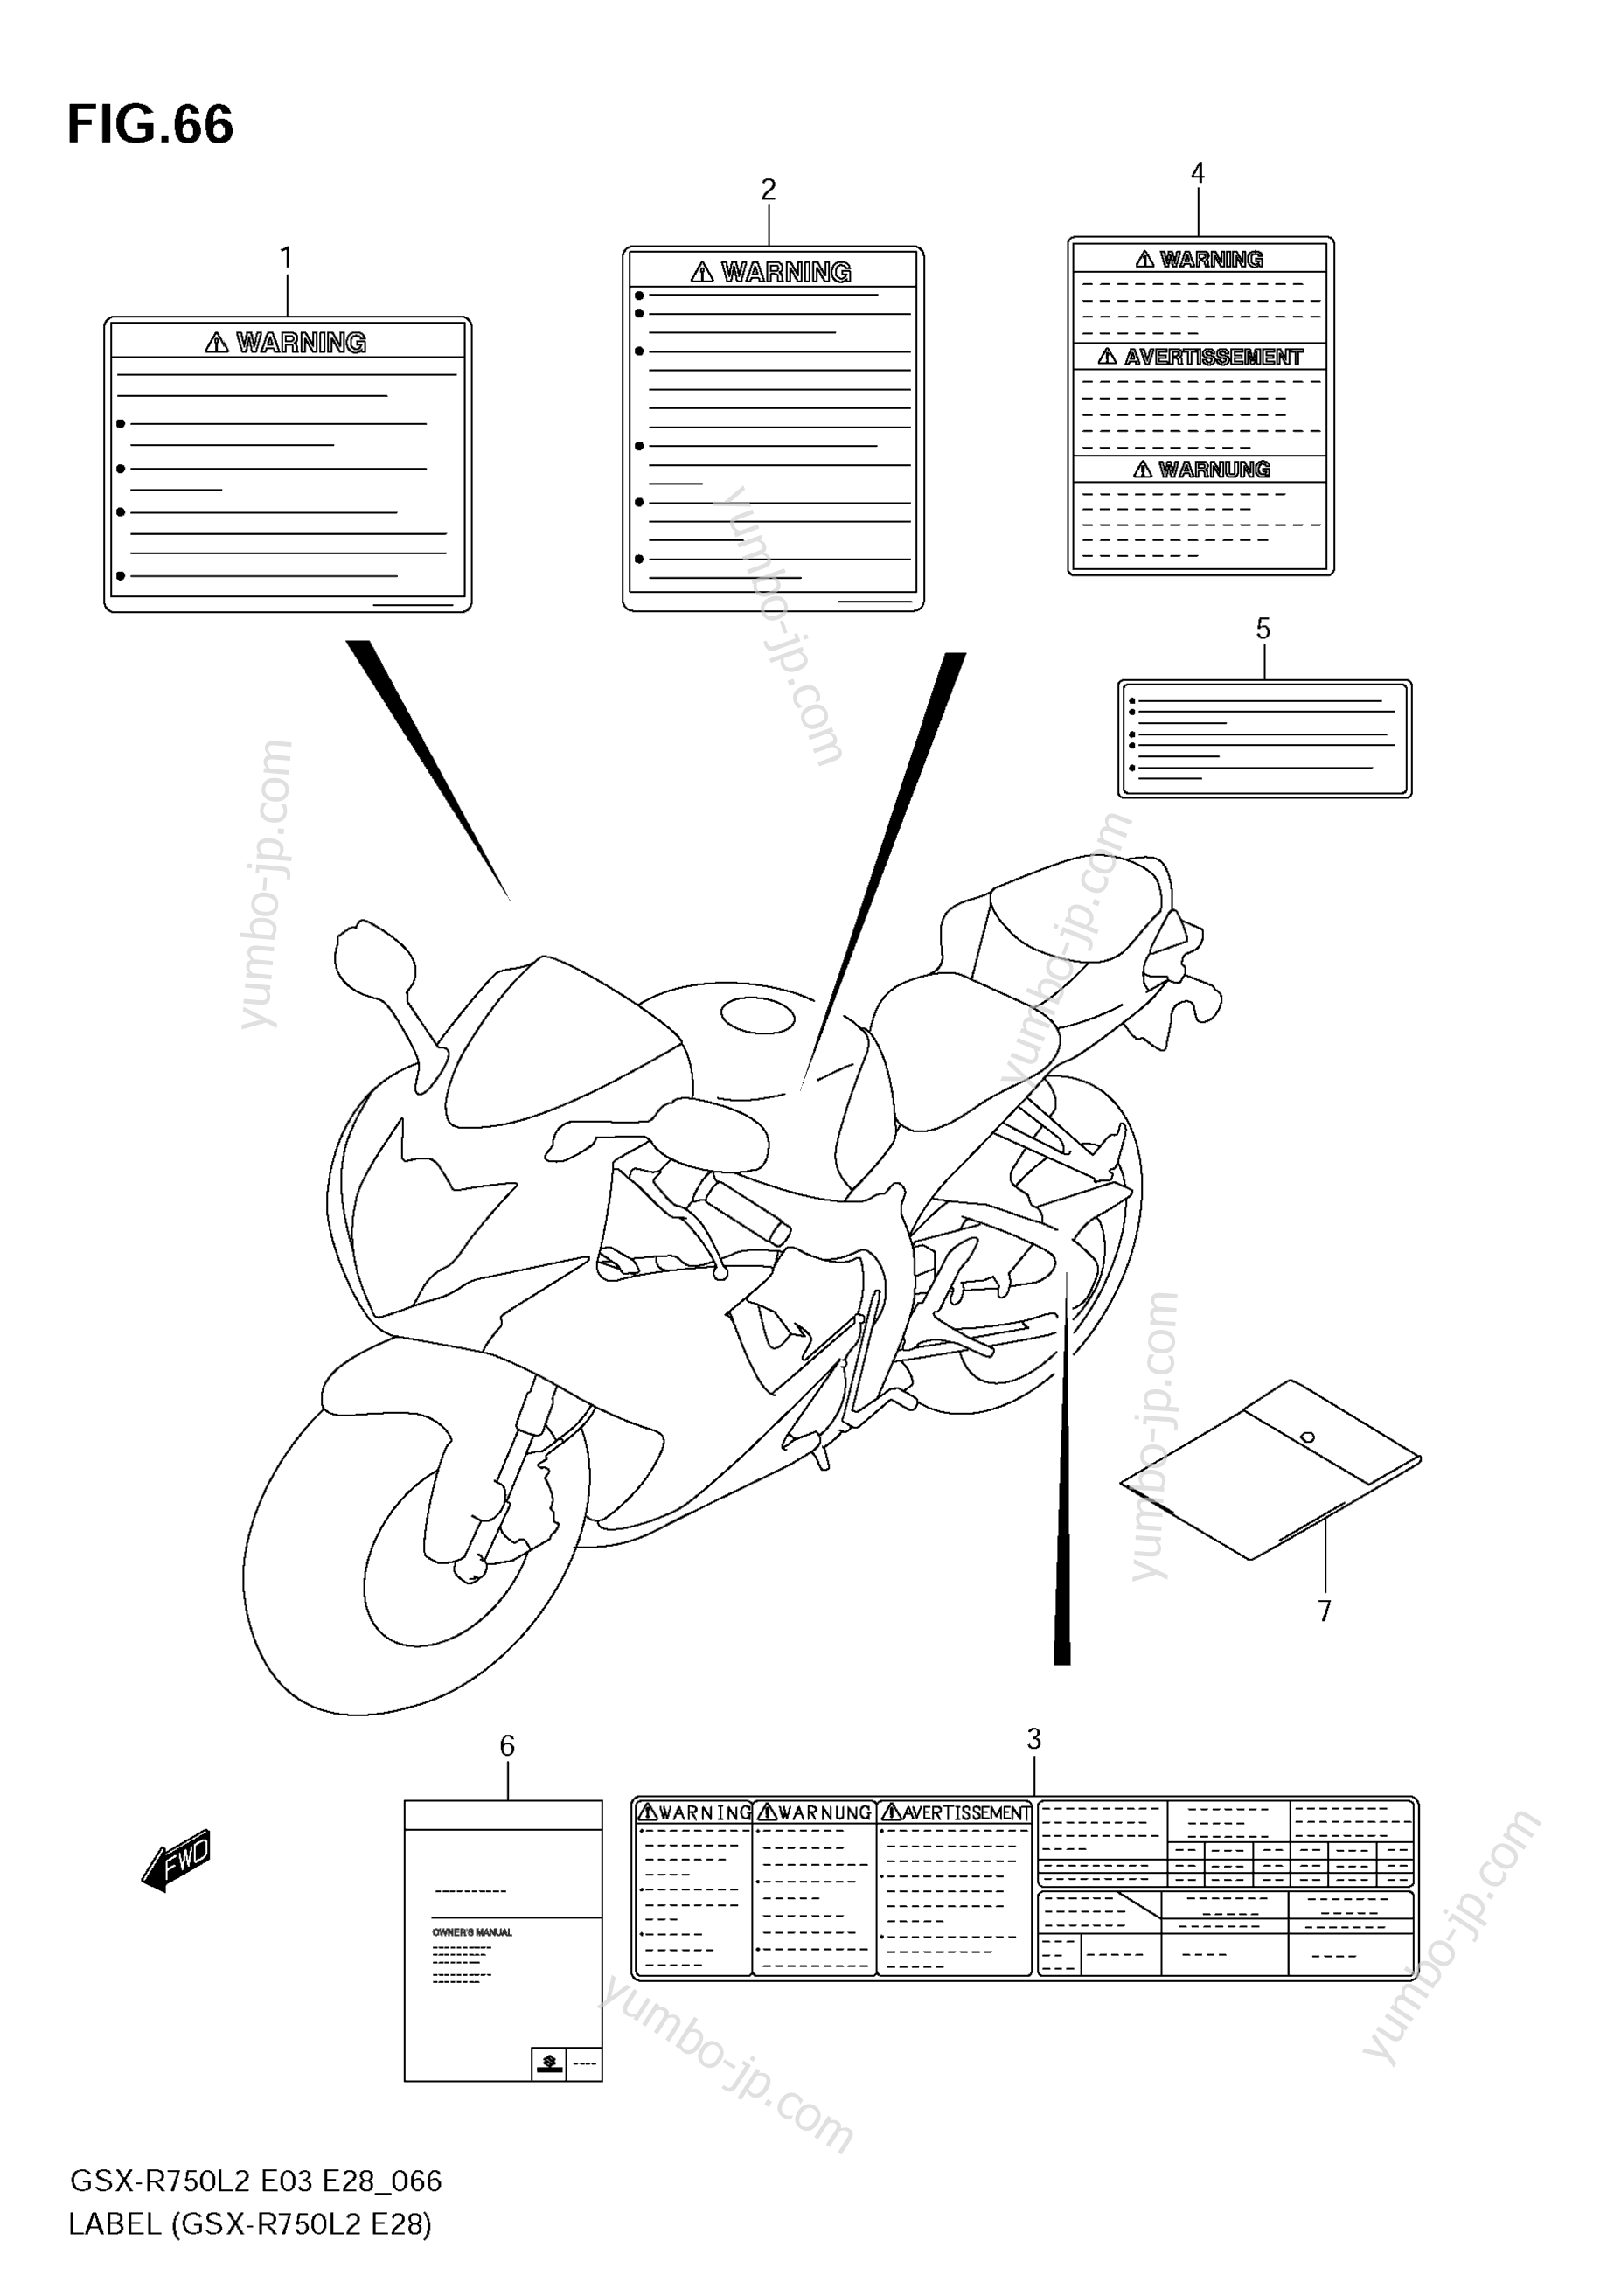 LABEL (GSX-R750 L2 E28) для мотоциклов SUZUKI GSX-R750 2012 г.